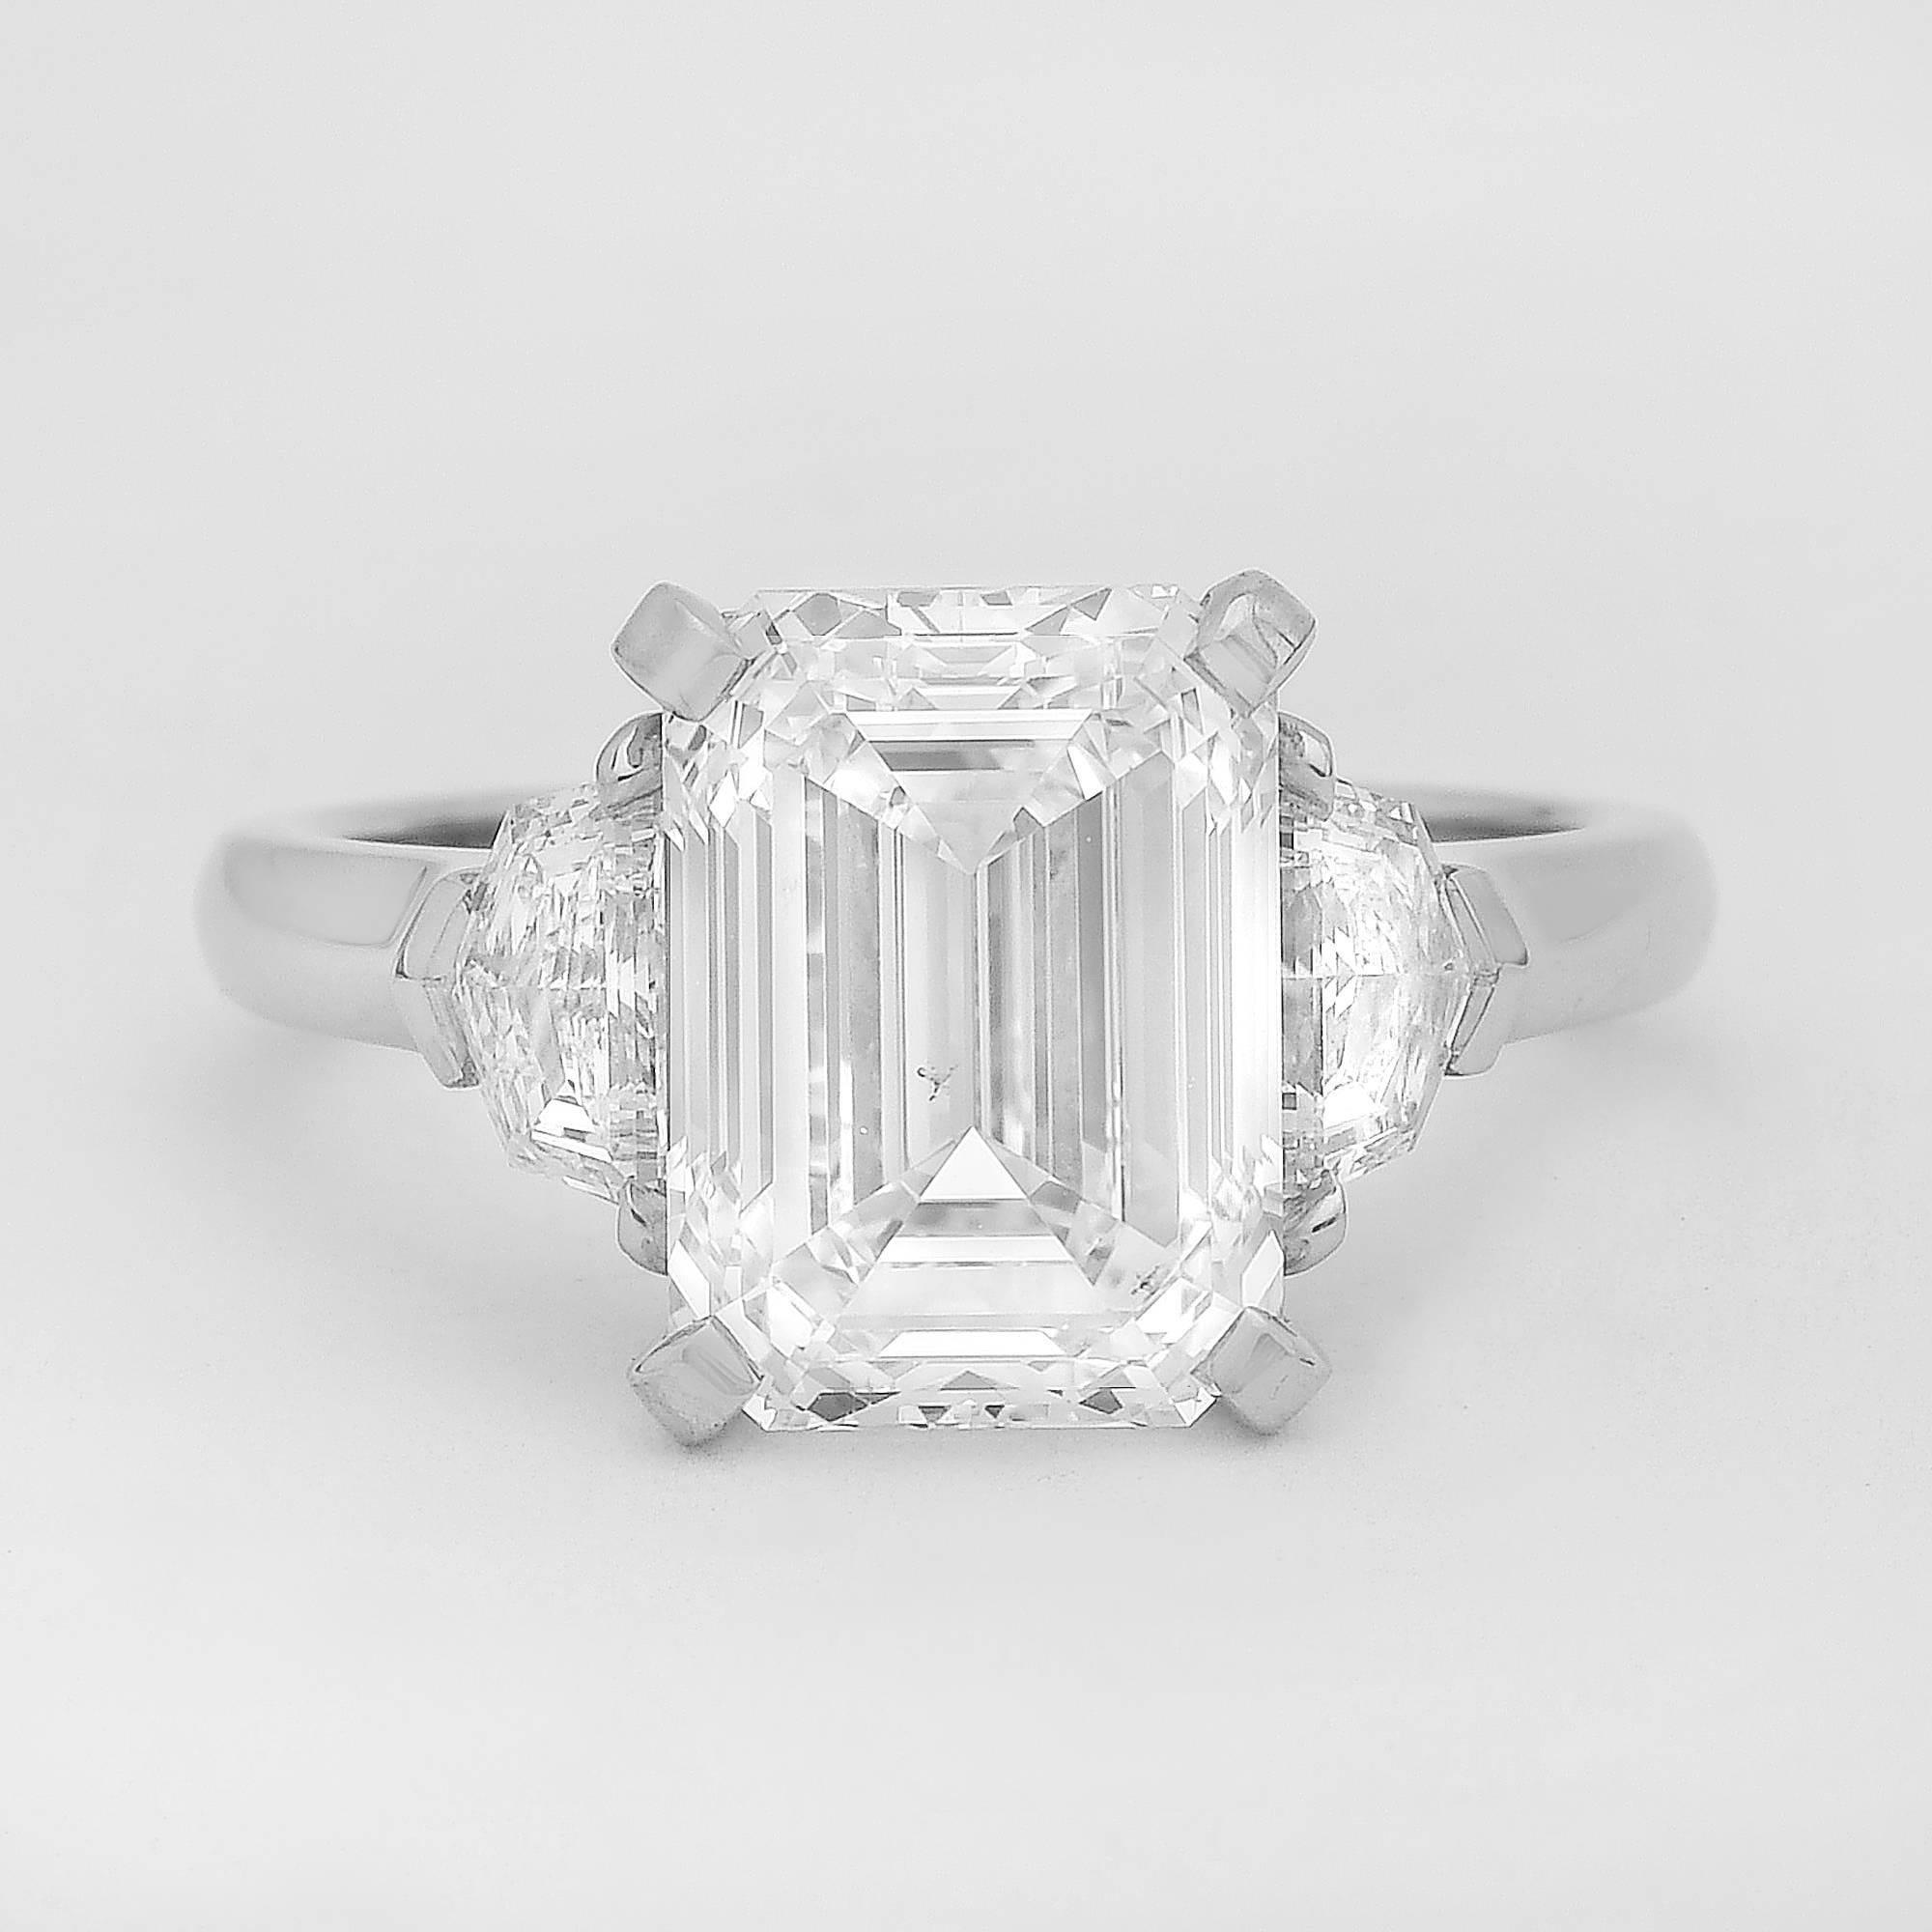 Betteridge GIA Report 4.11 Carat Emerald-Cut Diamond Engagement Ring 1